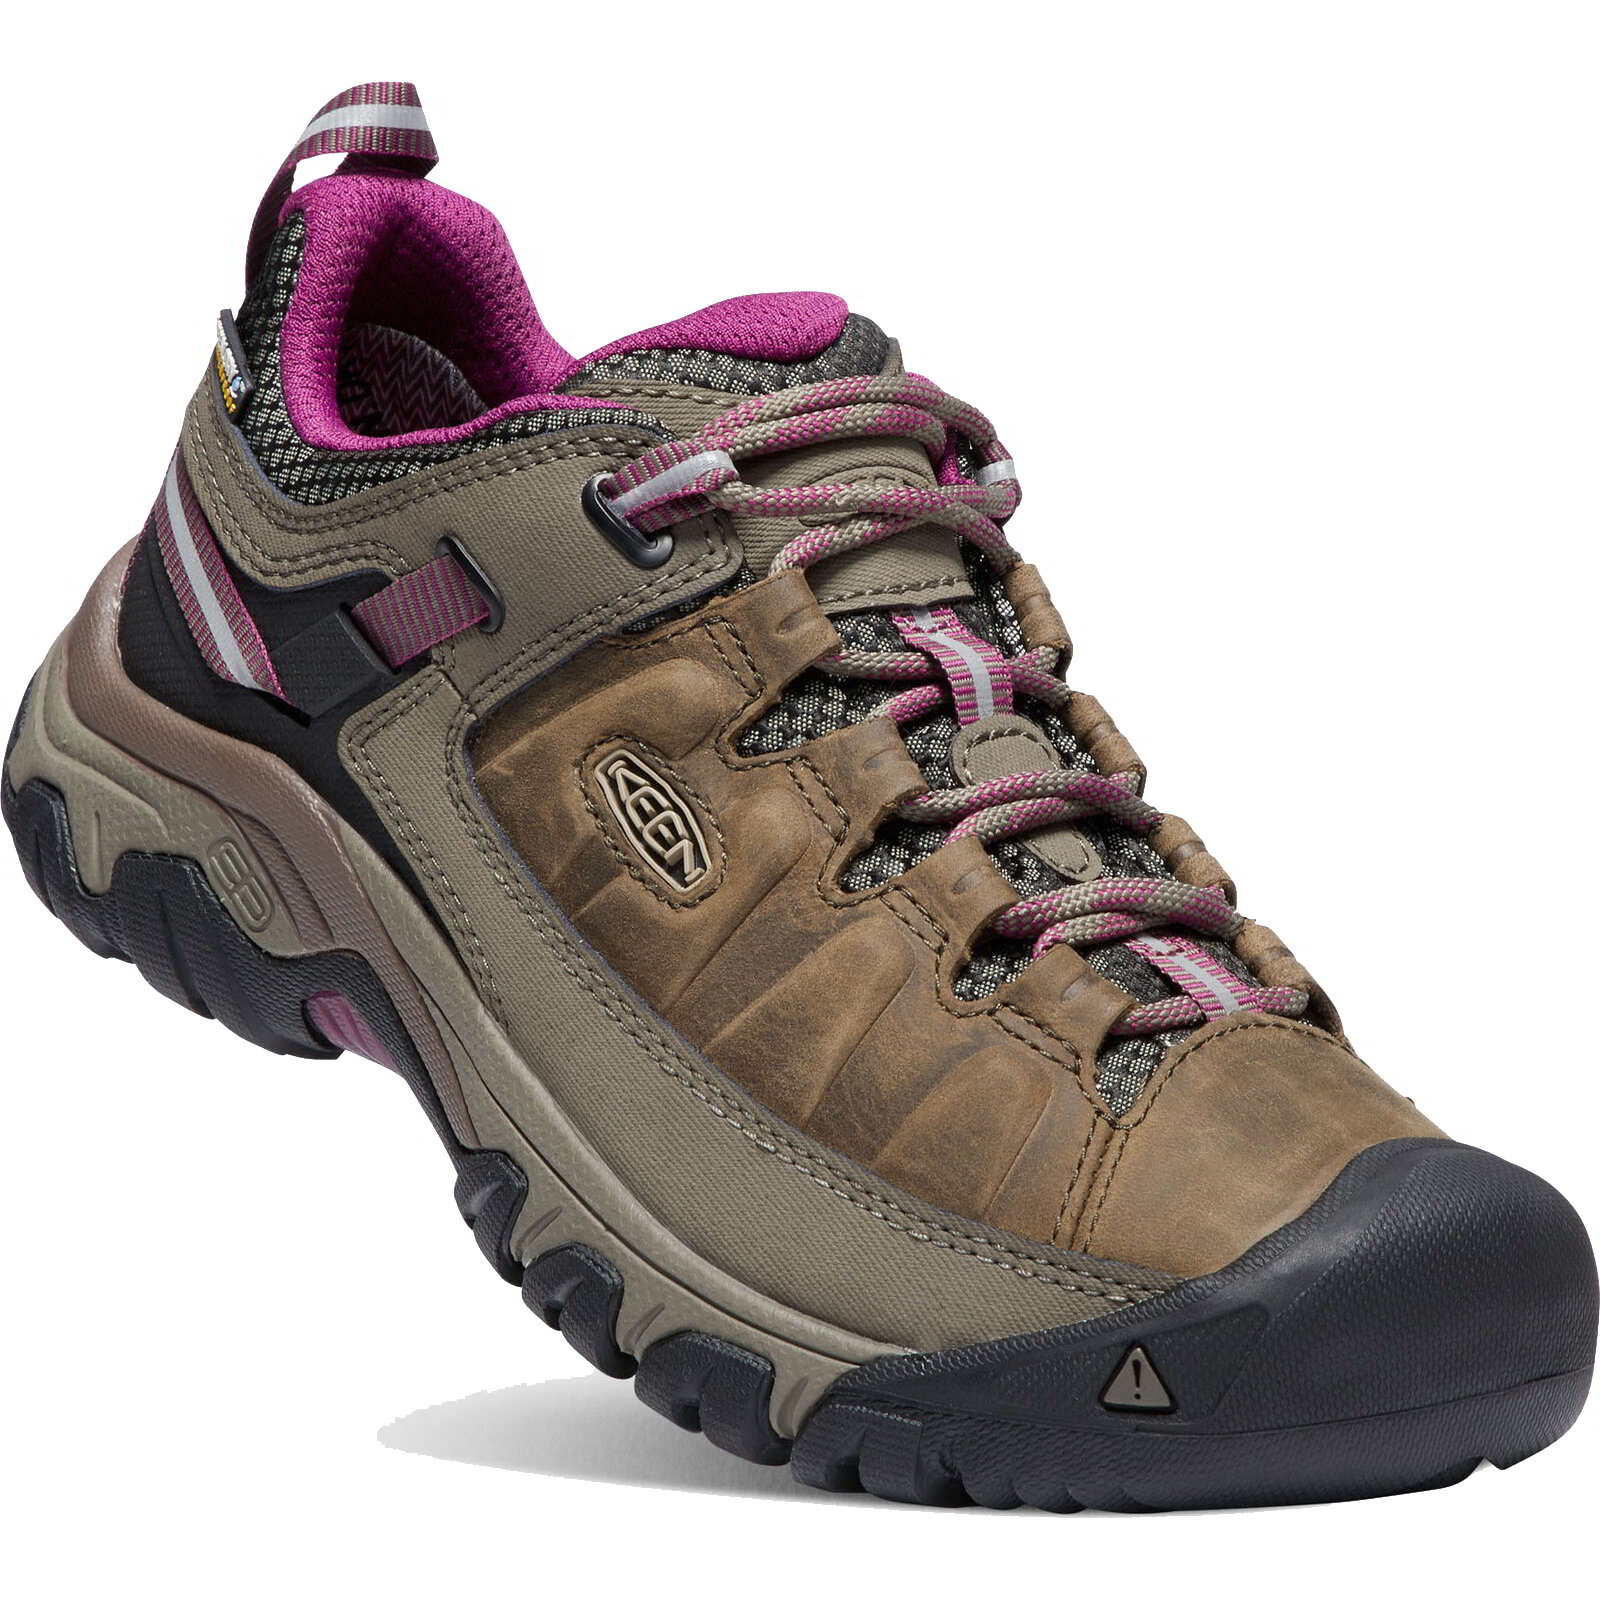 Keen Women's Targhee III WP Waterproof Walking Hiking Shoes - UK 5